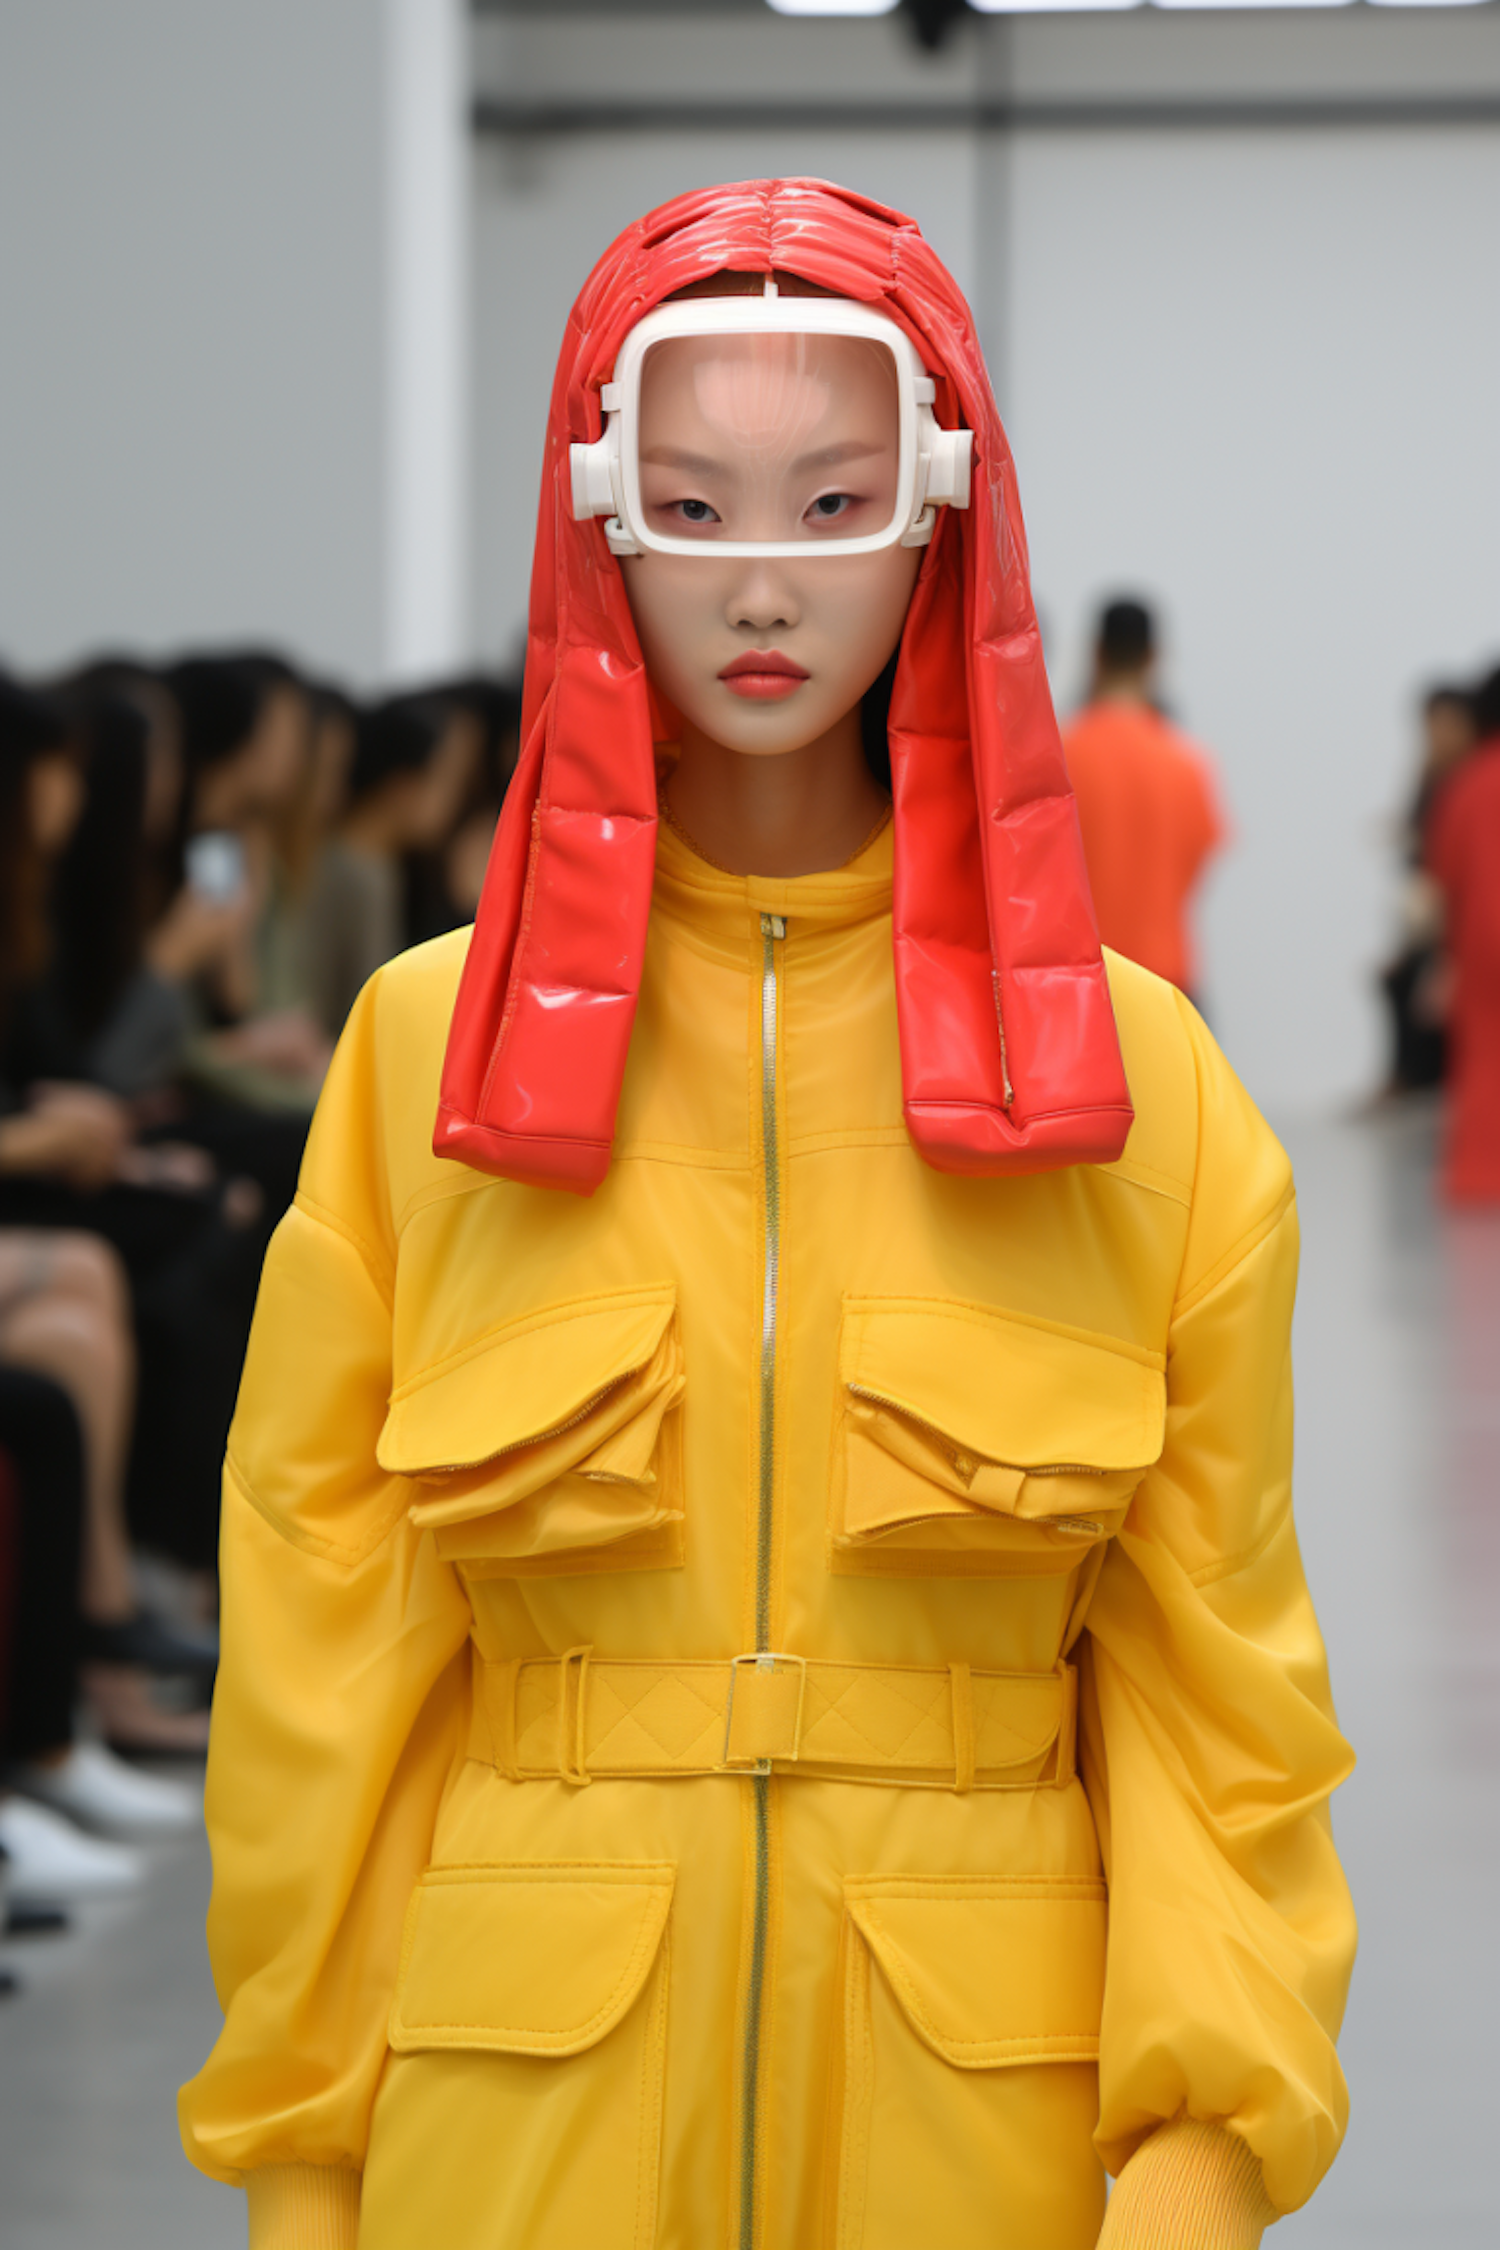 Sunshine Yellow Avant-Garde Runway Model with Red Hood and White Headphones